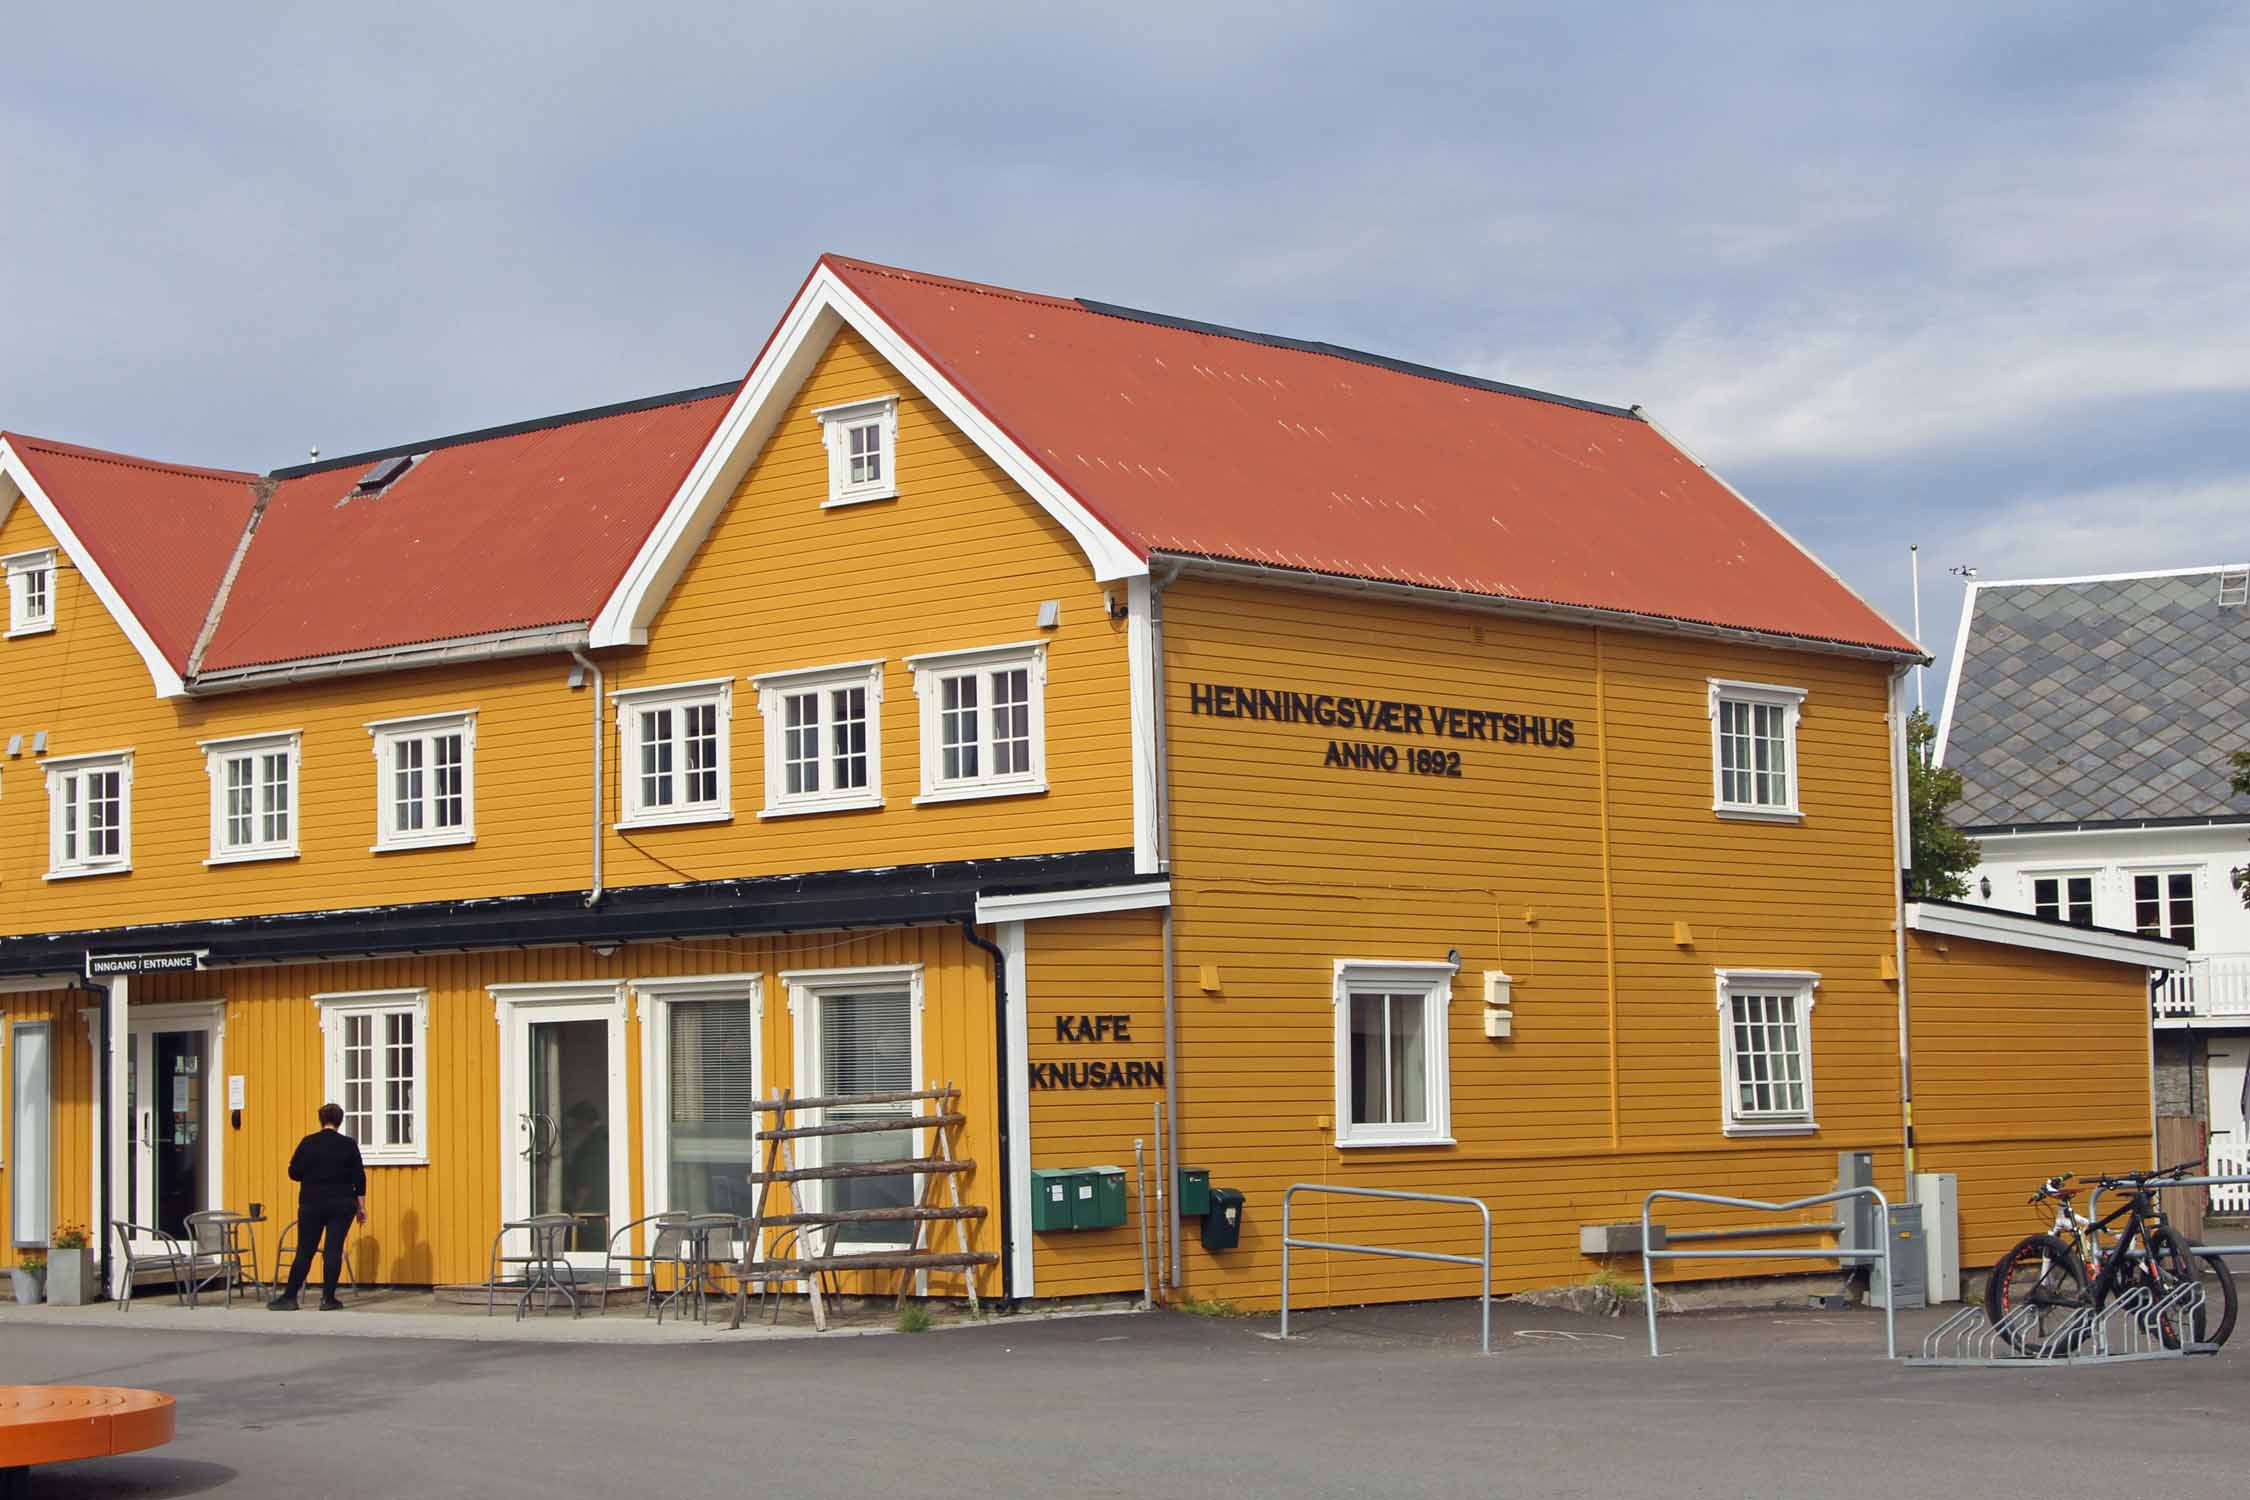 Norvège, Lofoten, Henningsvaer, maison typique